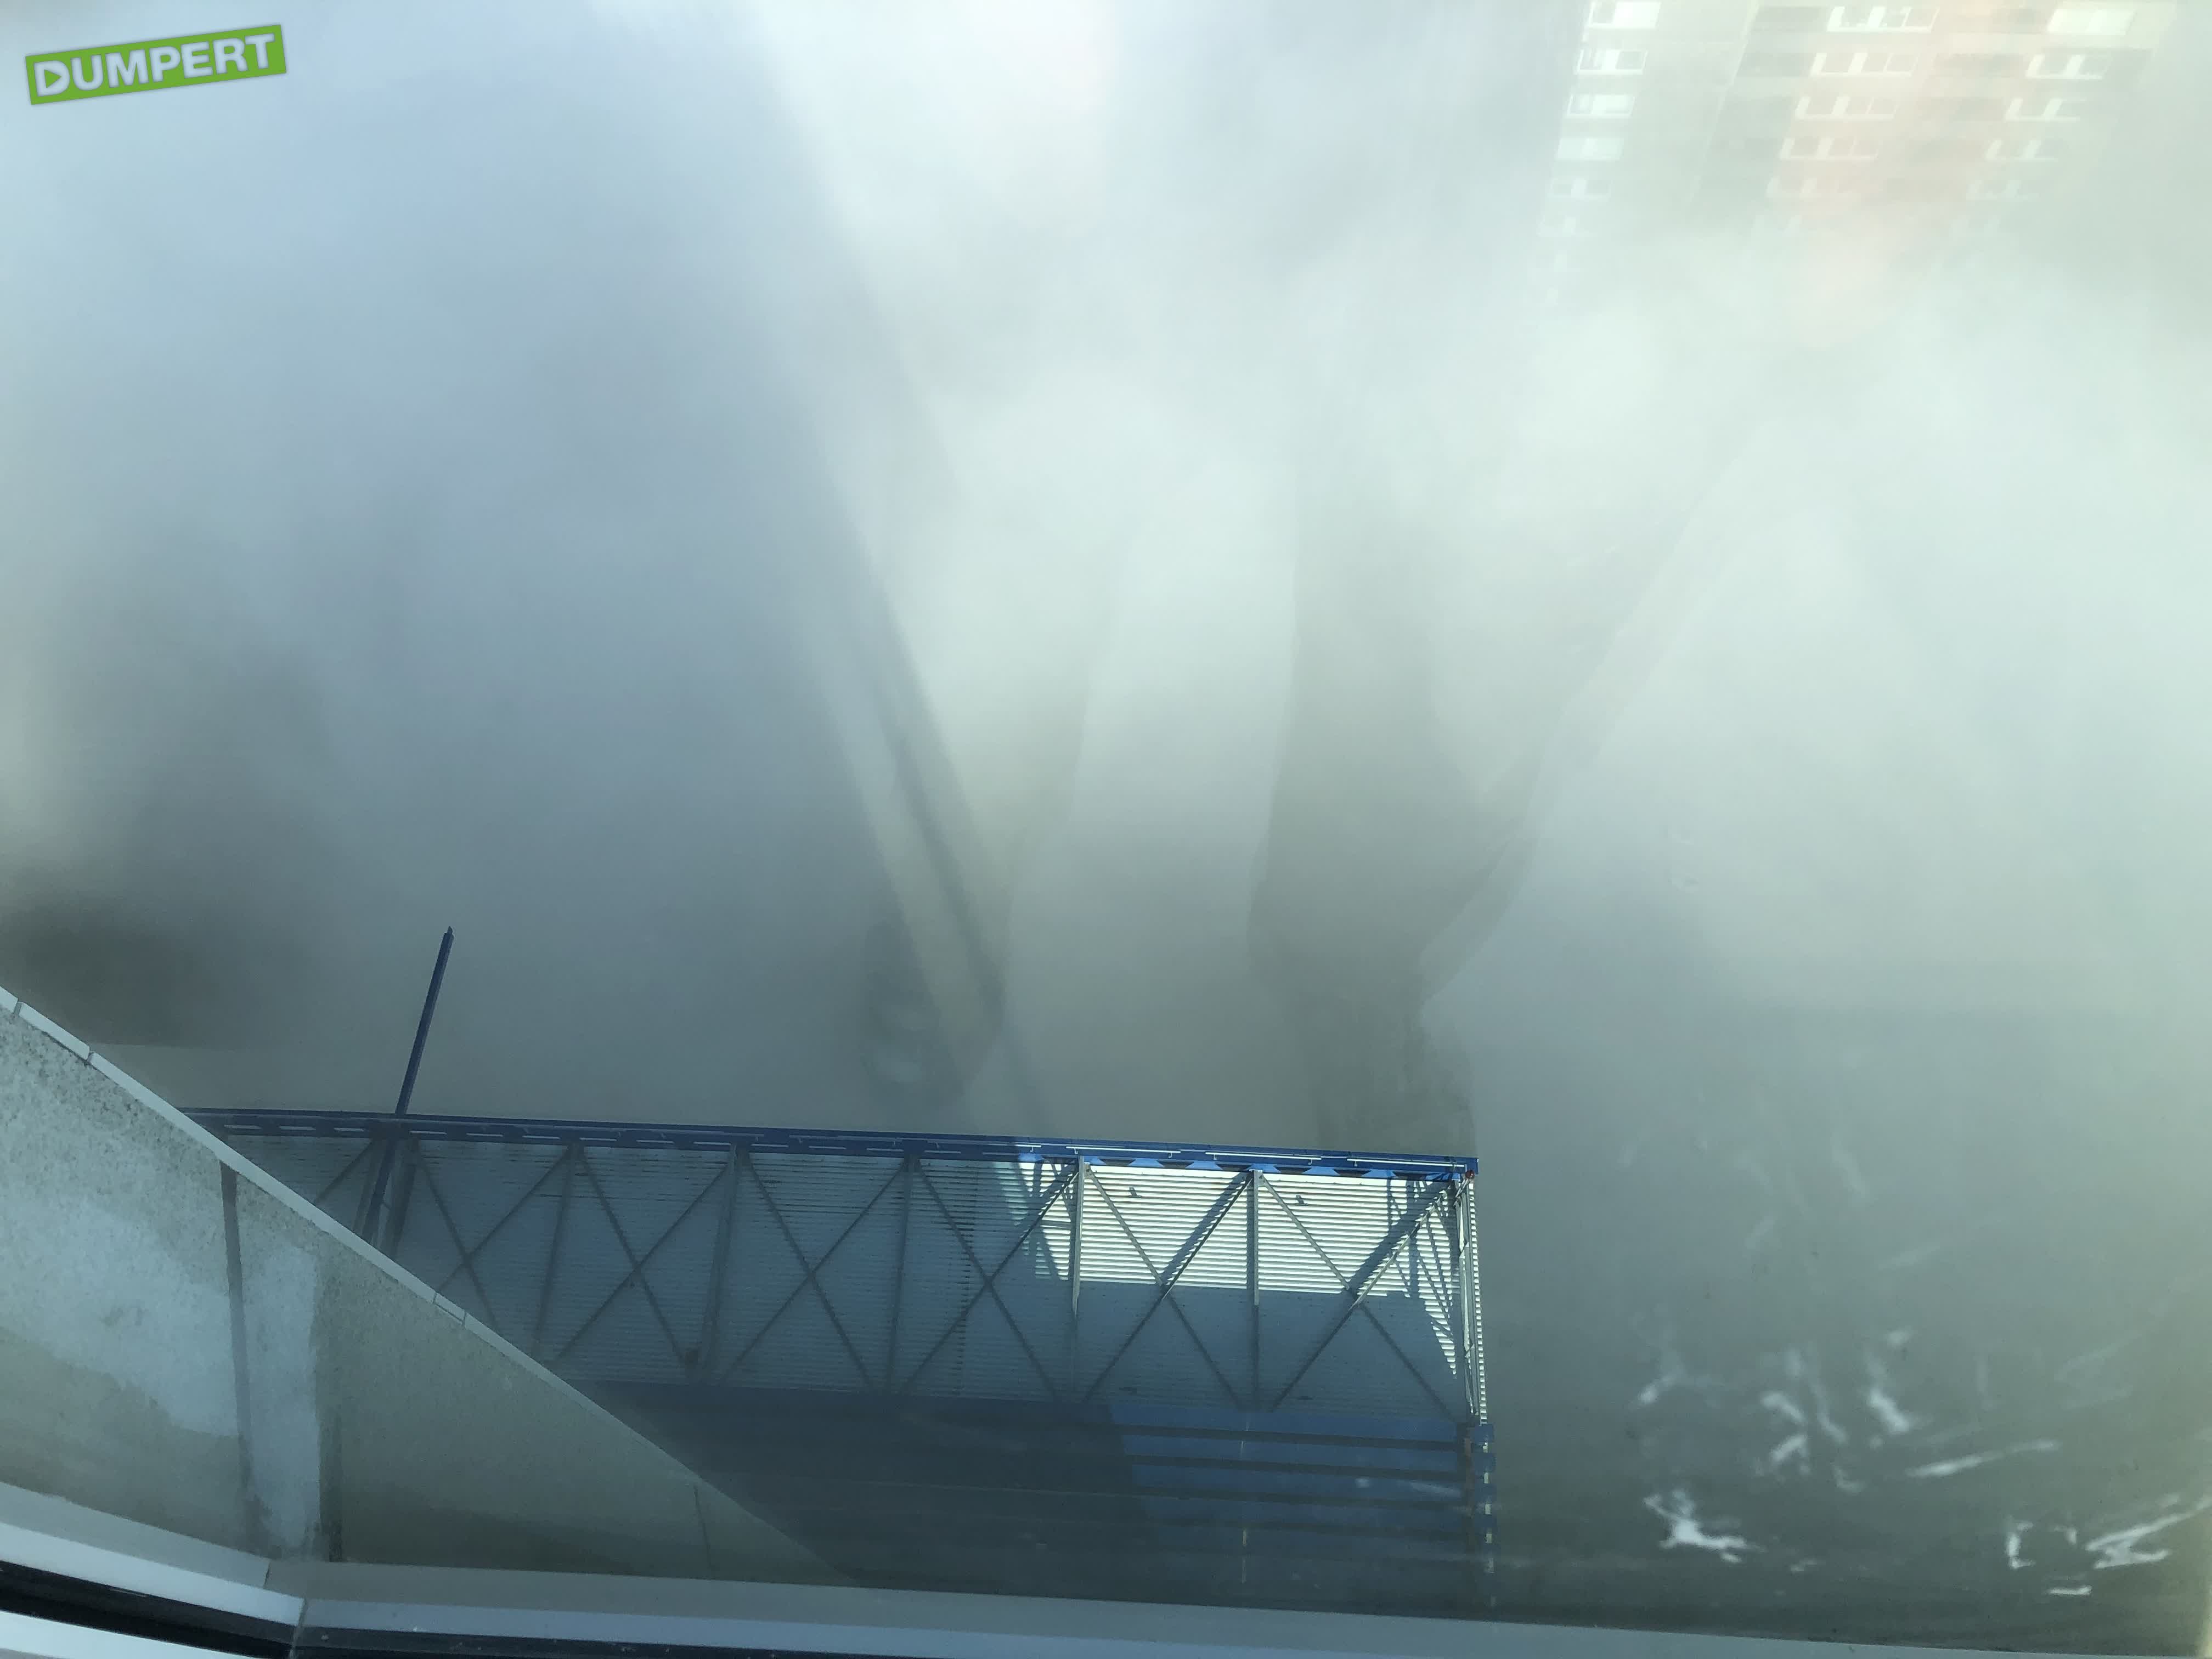 Rotterdam in de mist